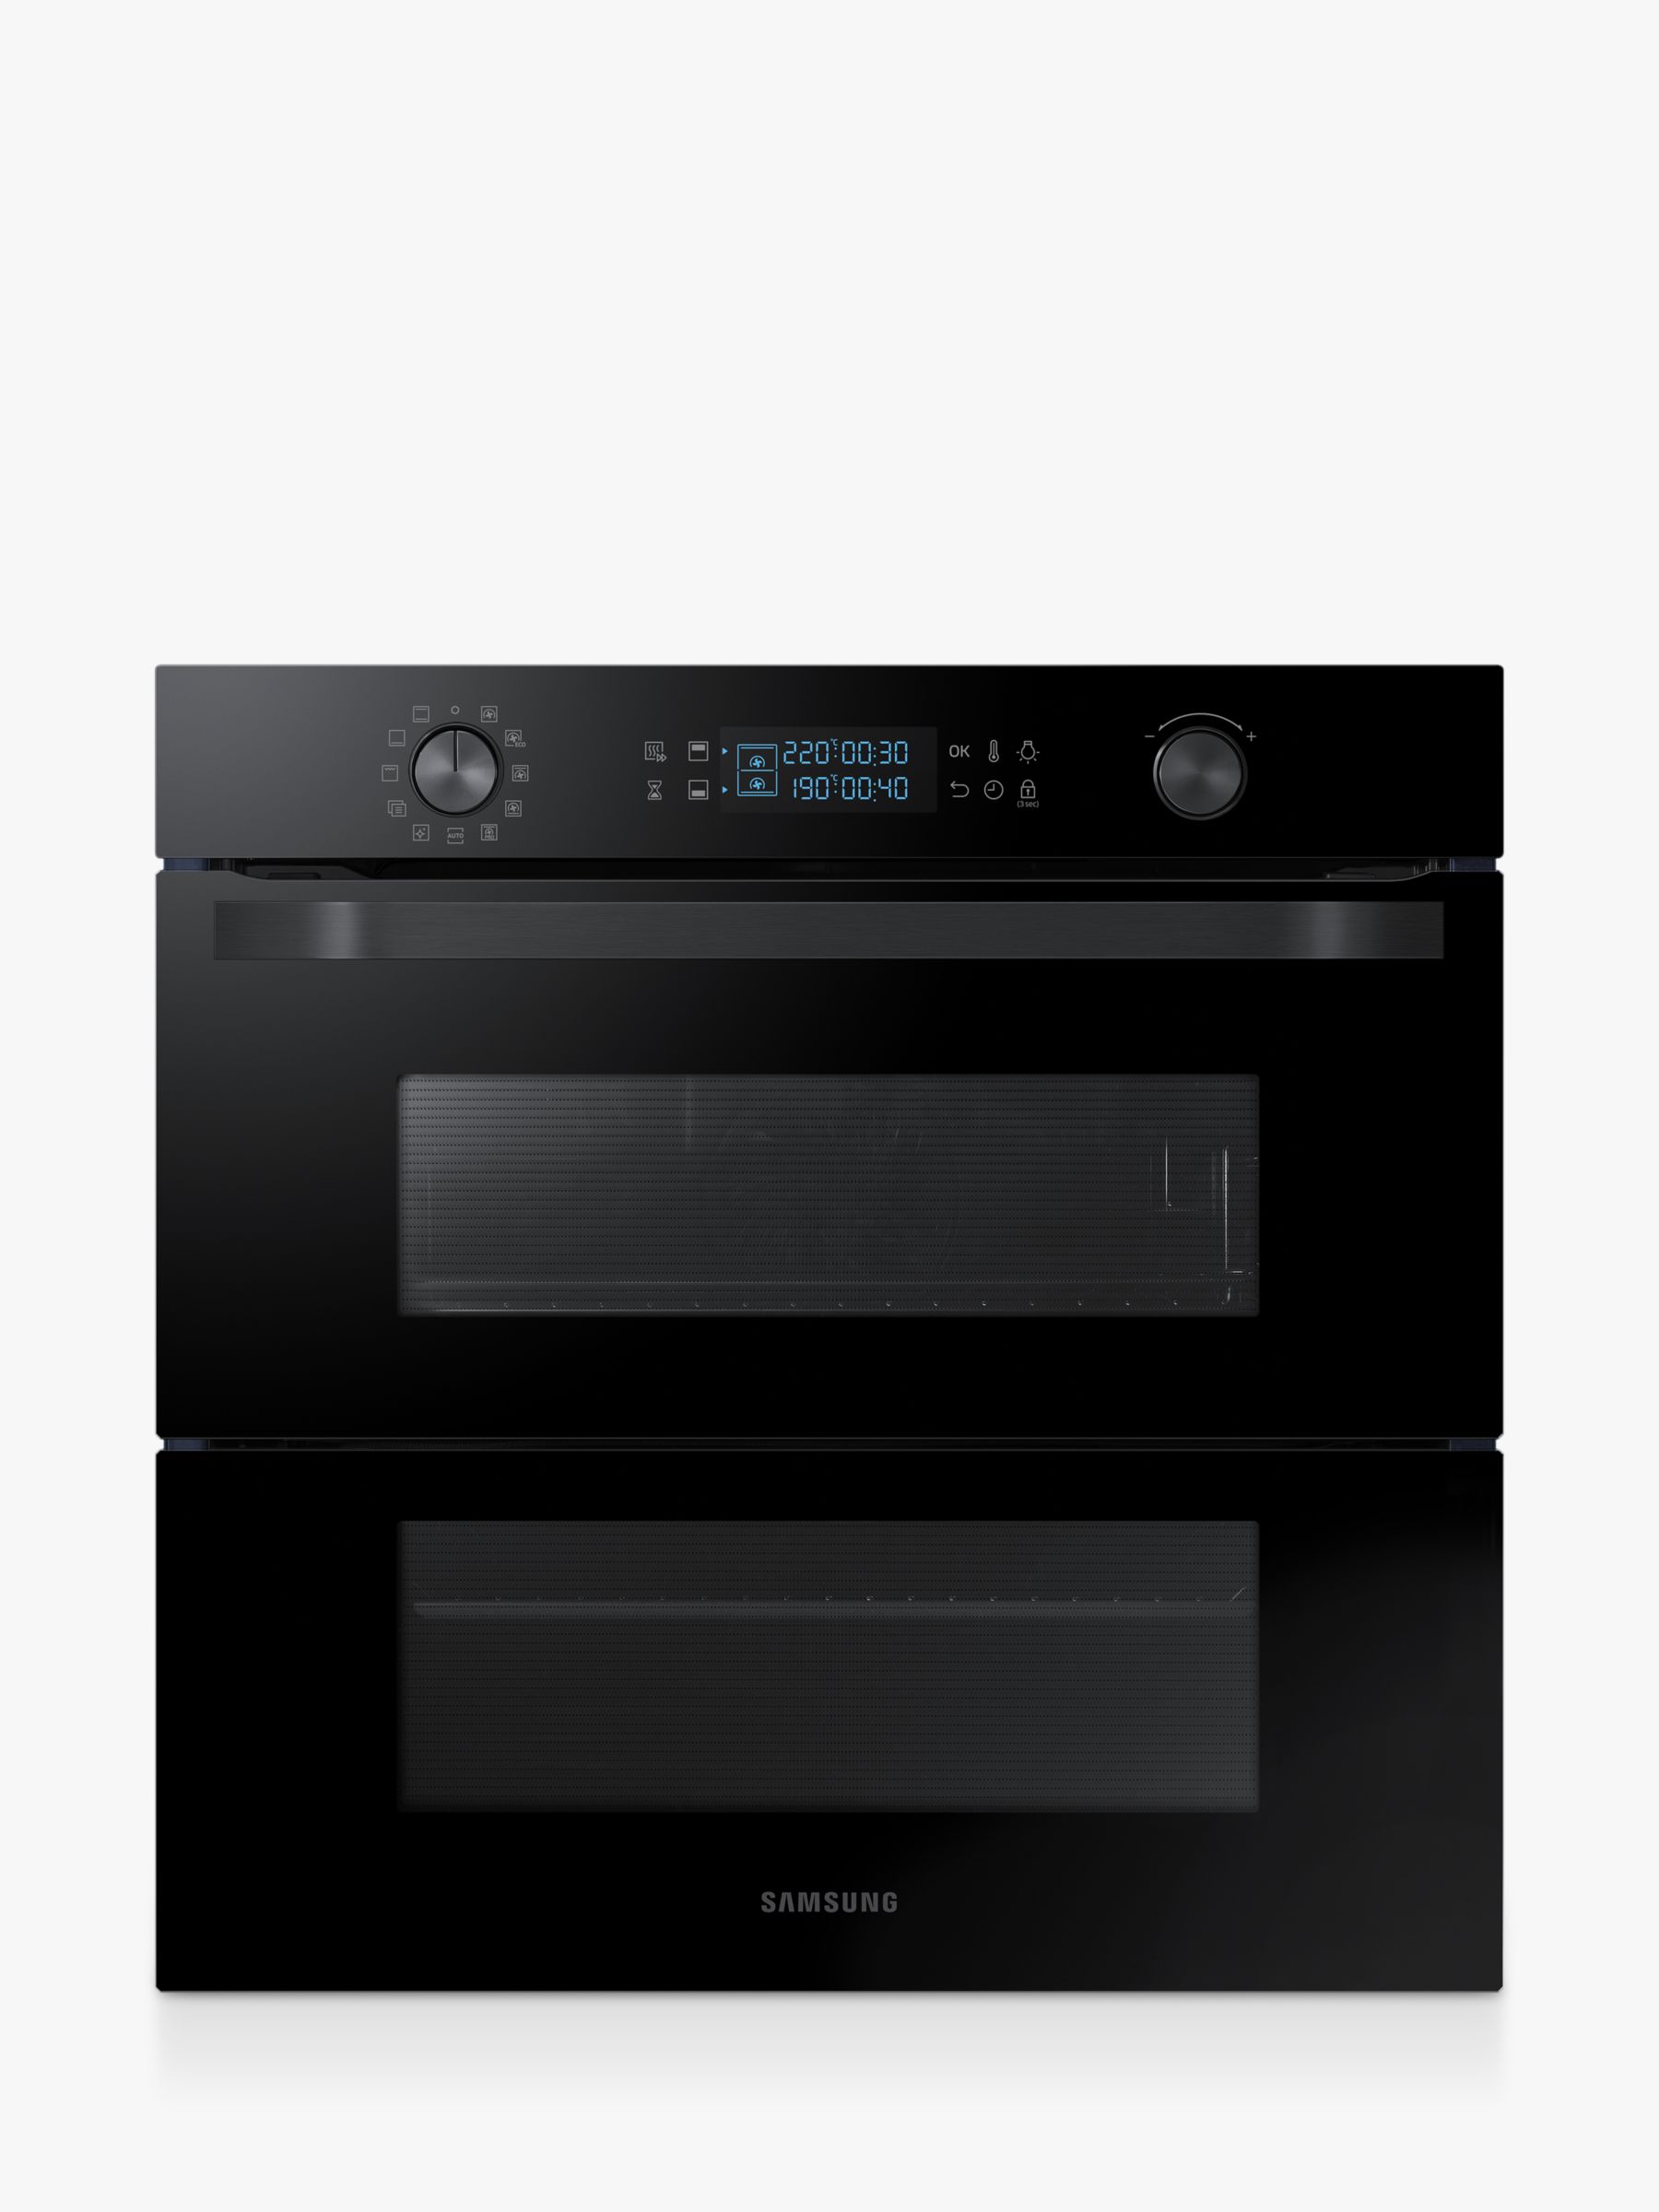 Samsung Prezio Dual Cook Flex NV75N5641RB Built In Electric Single Oven, Black